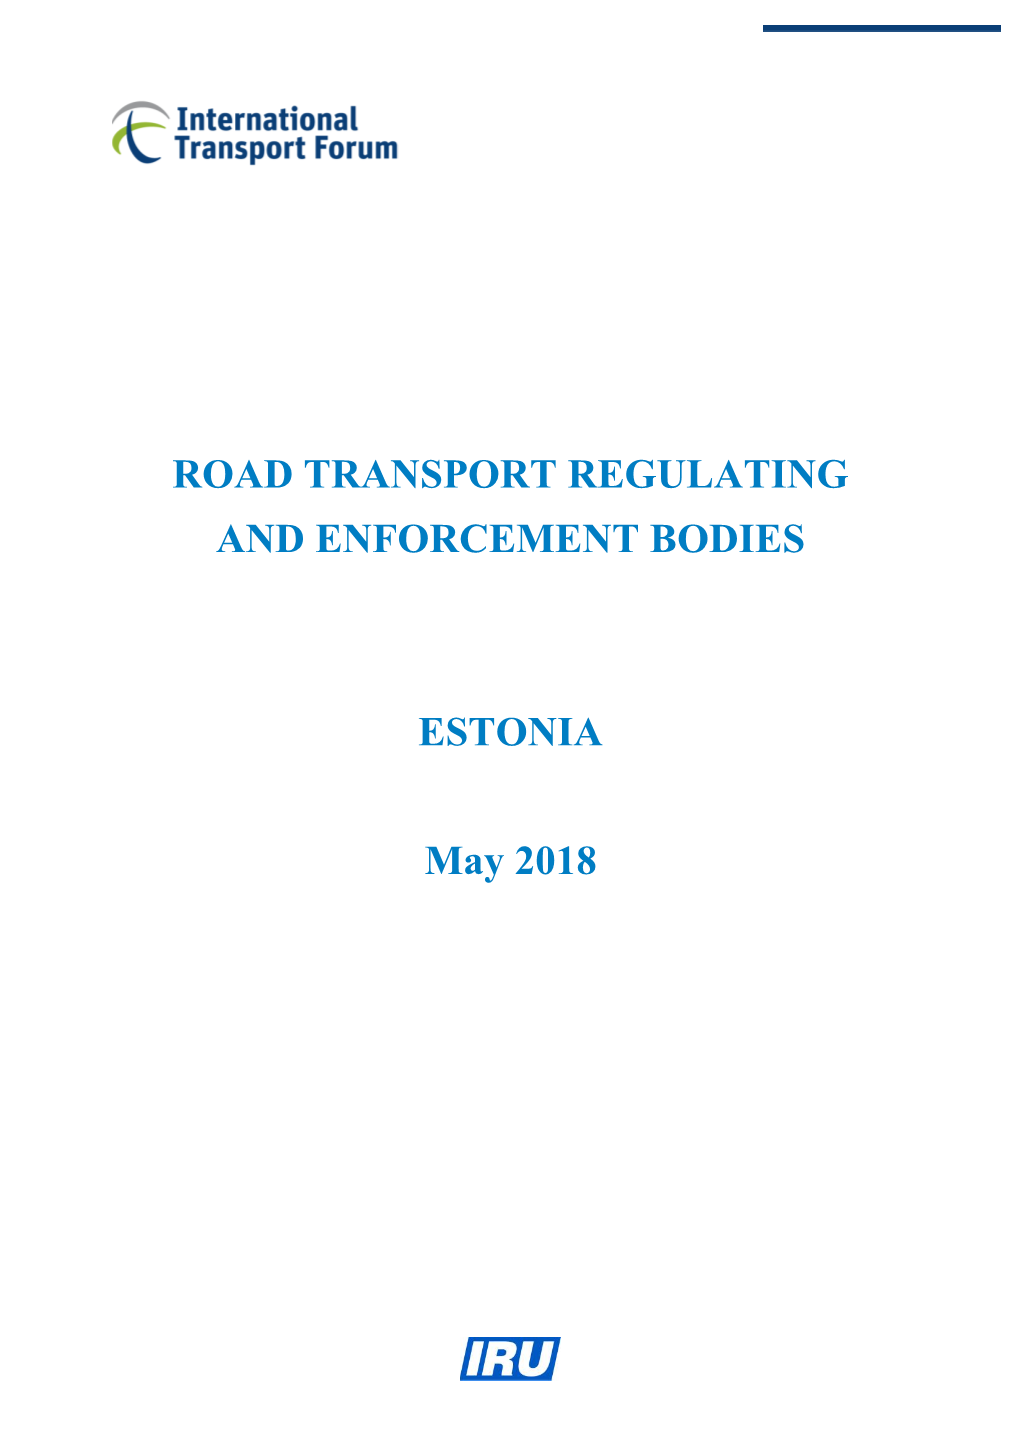 Estonia Road Transport Regulating and Enforcement Bodies